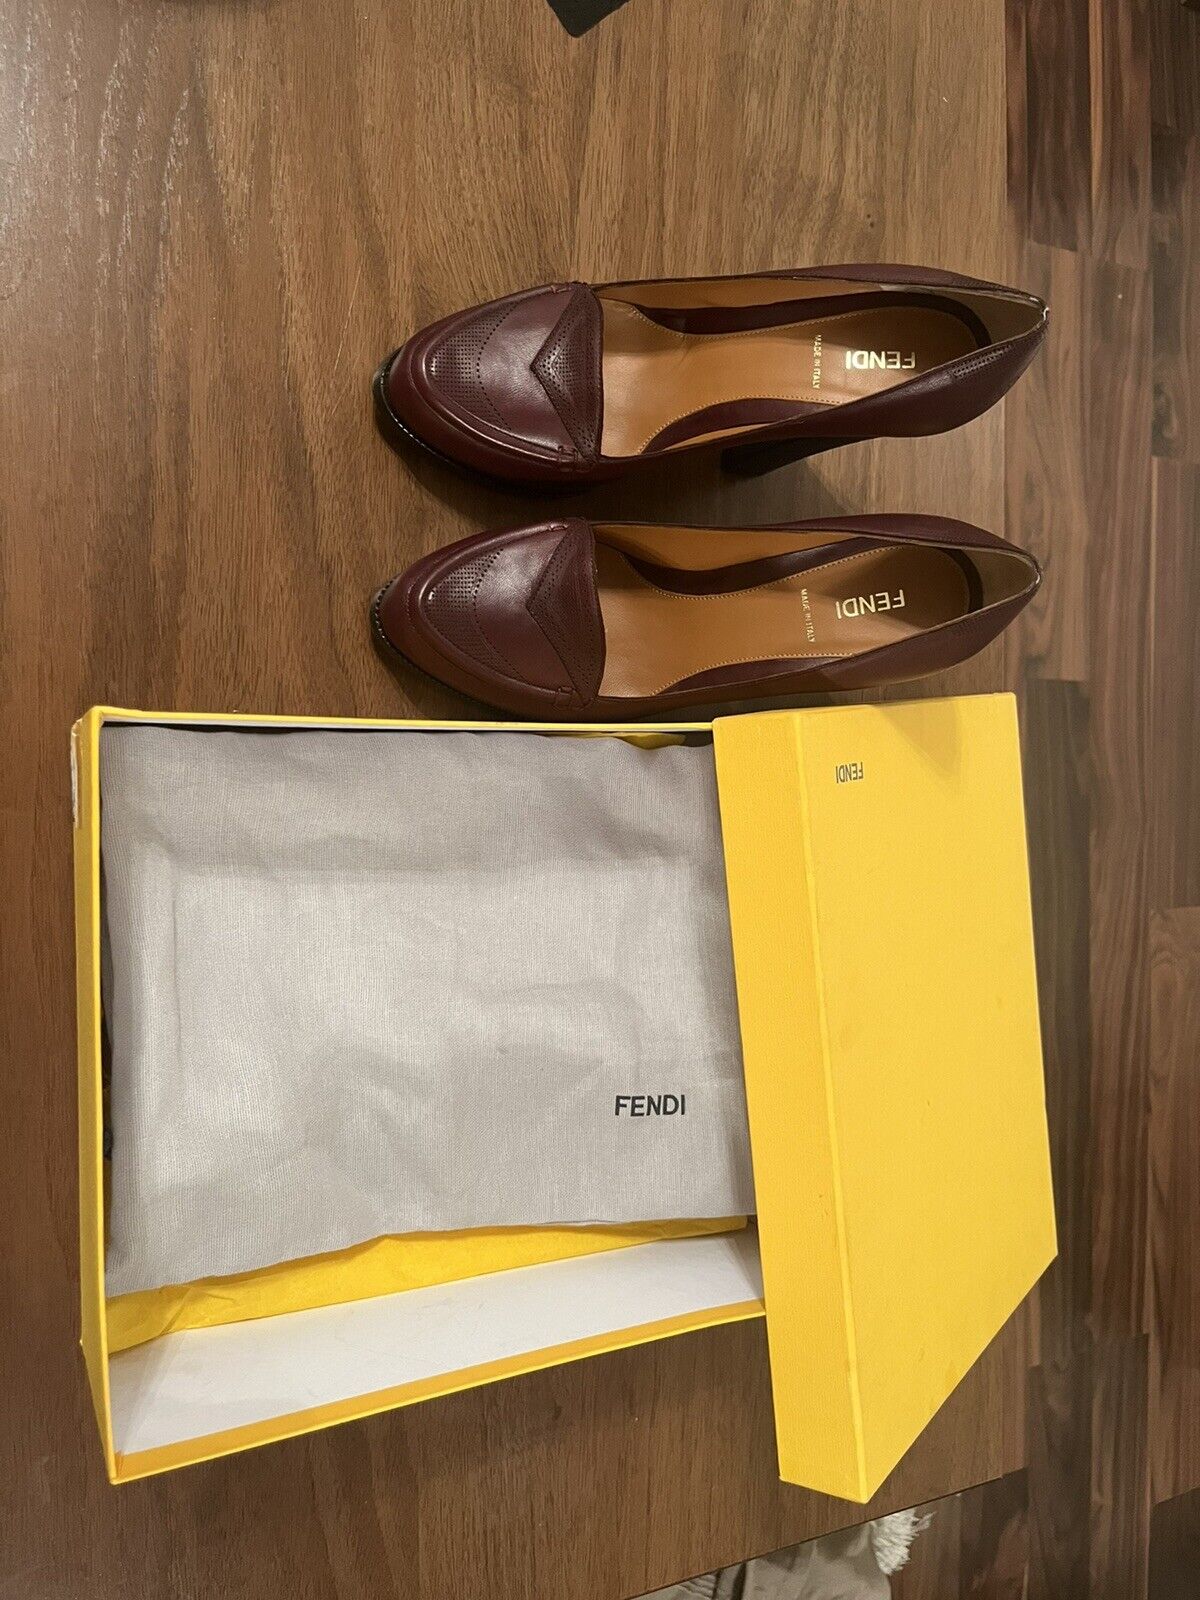 Fendi heels Rare | eBay